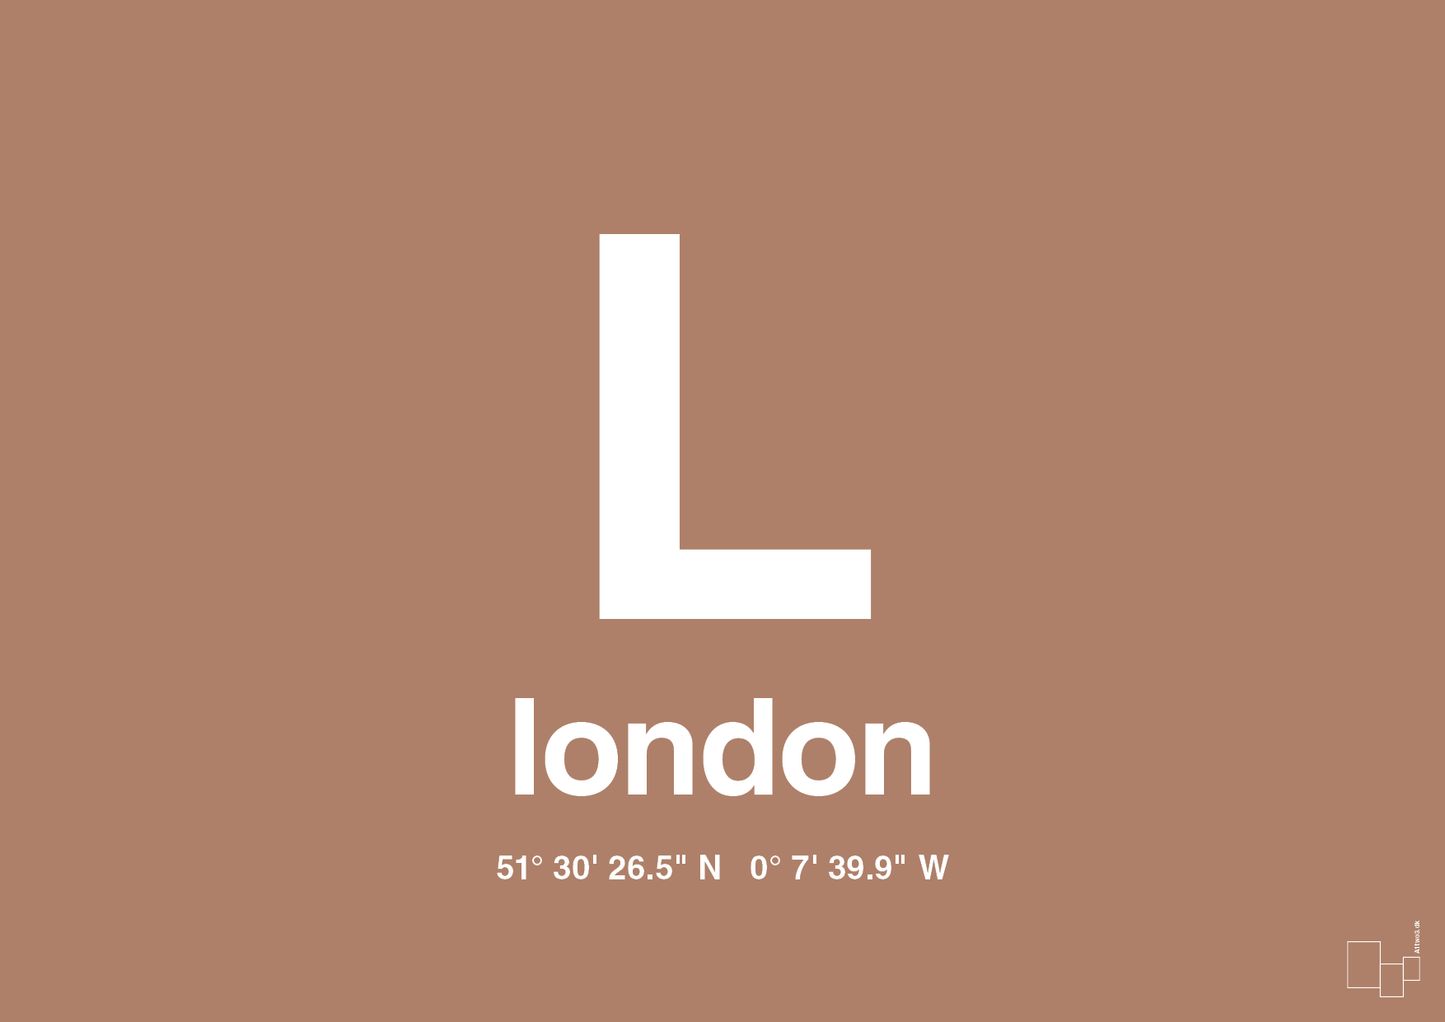 byplakat london med koordinater - Plakat med Grafik i Cider Spice